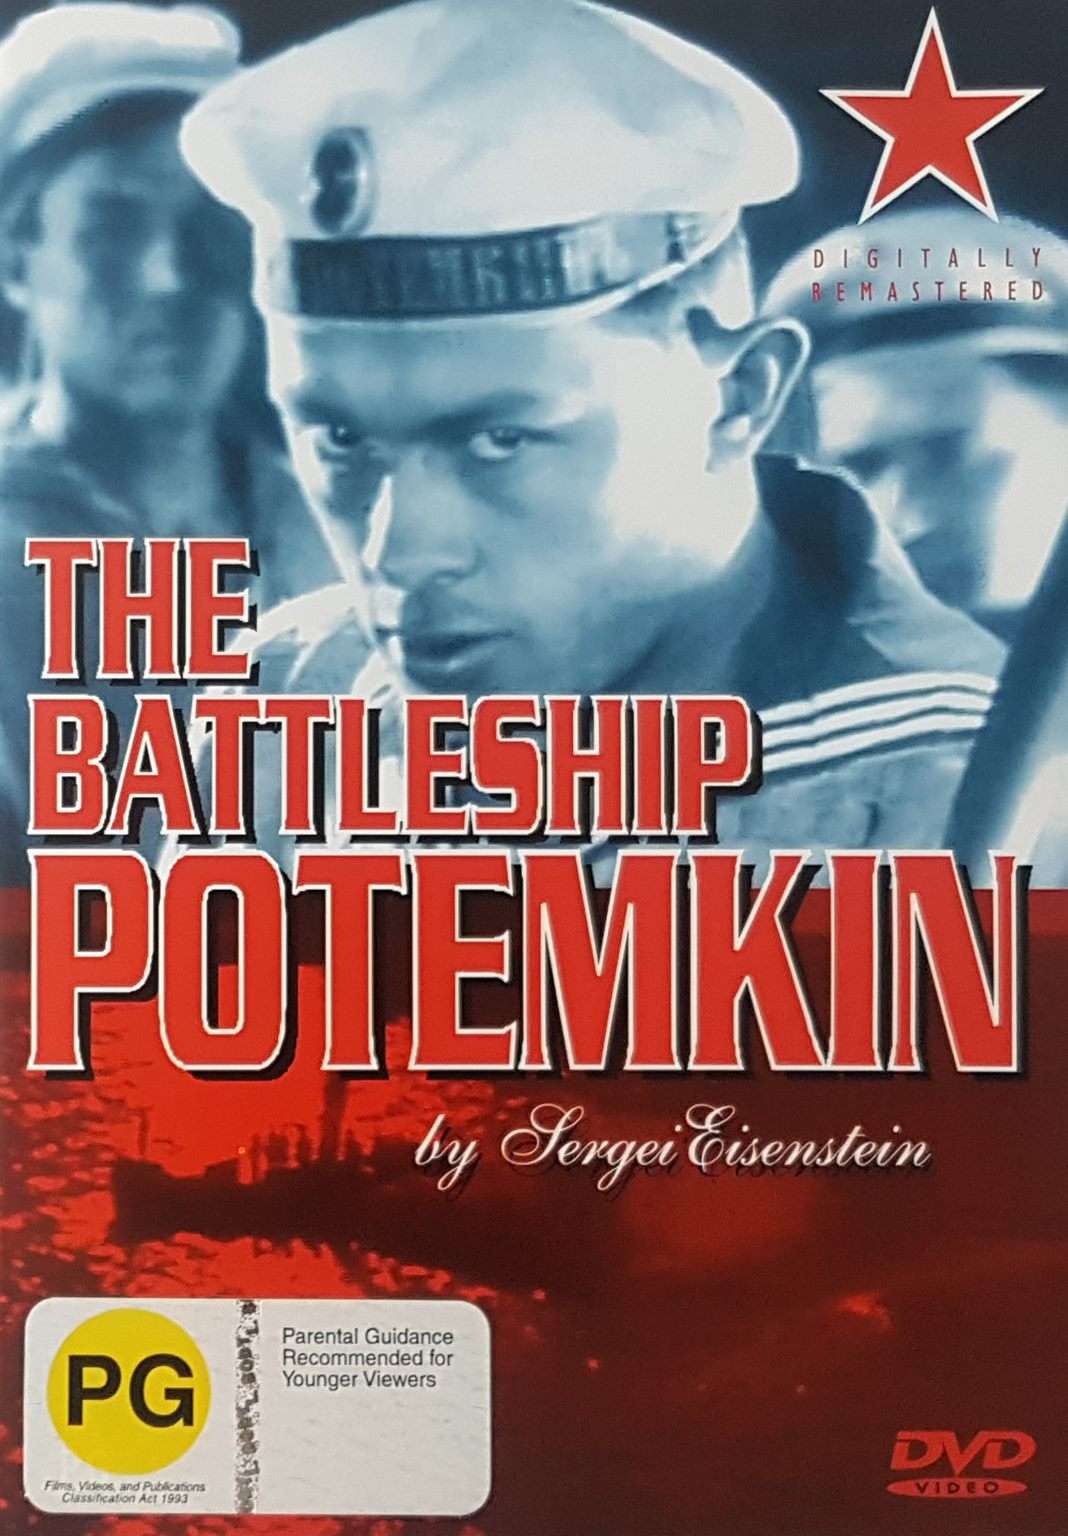 The Battleship Potemkin